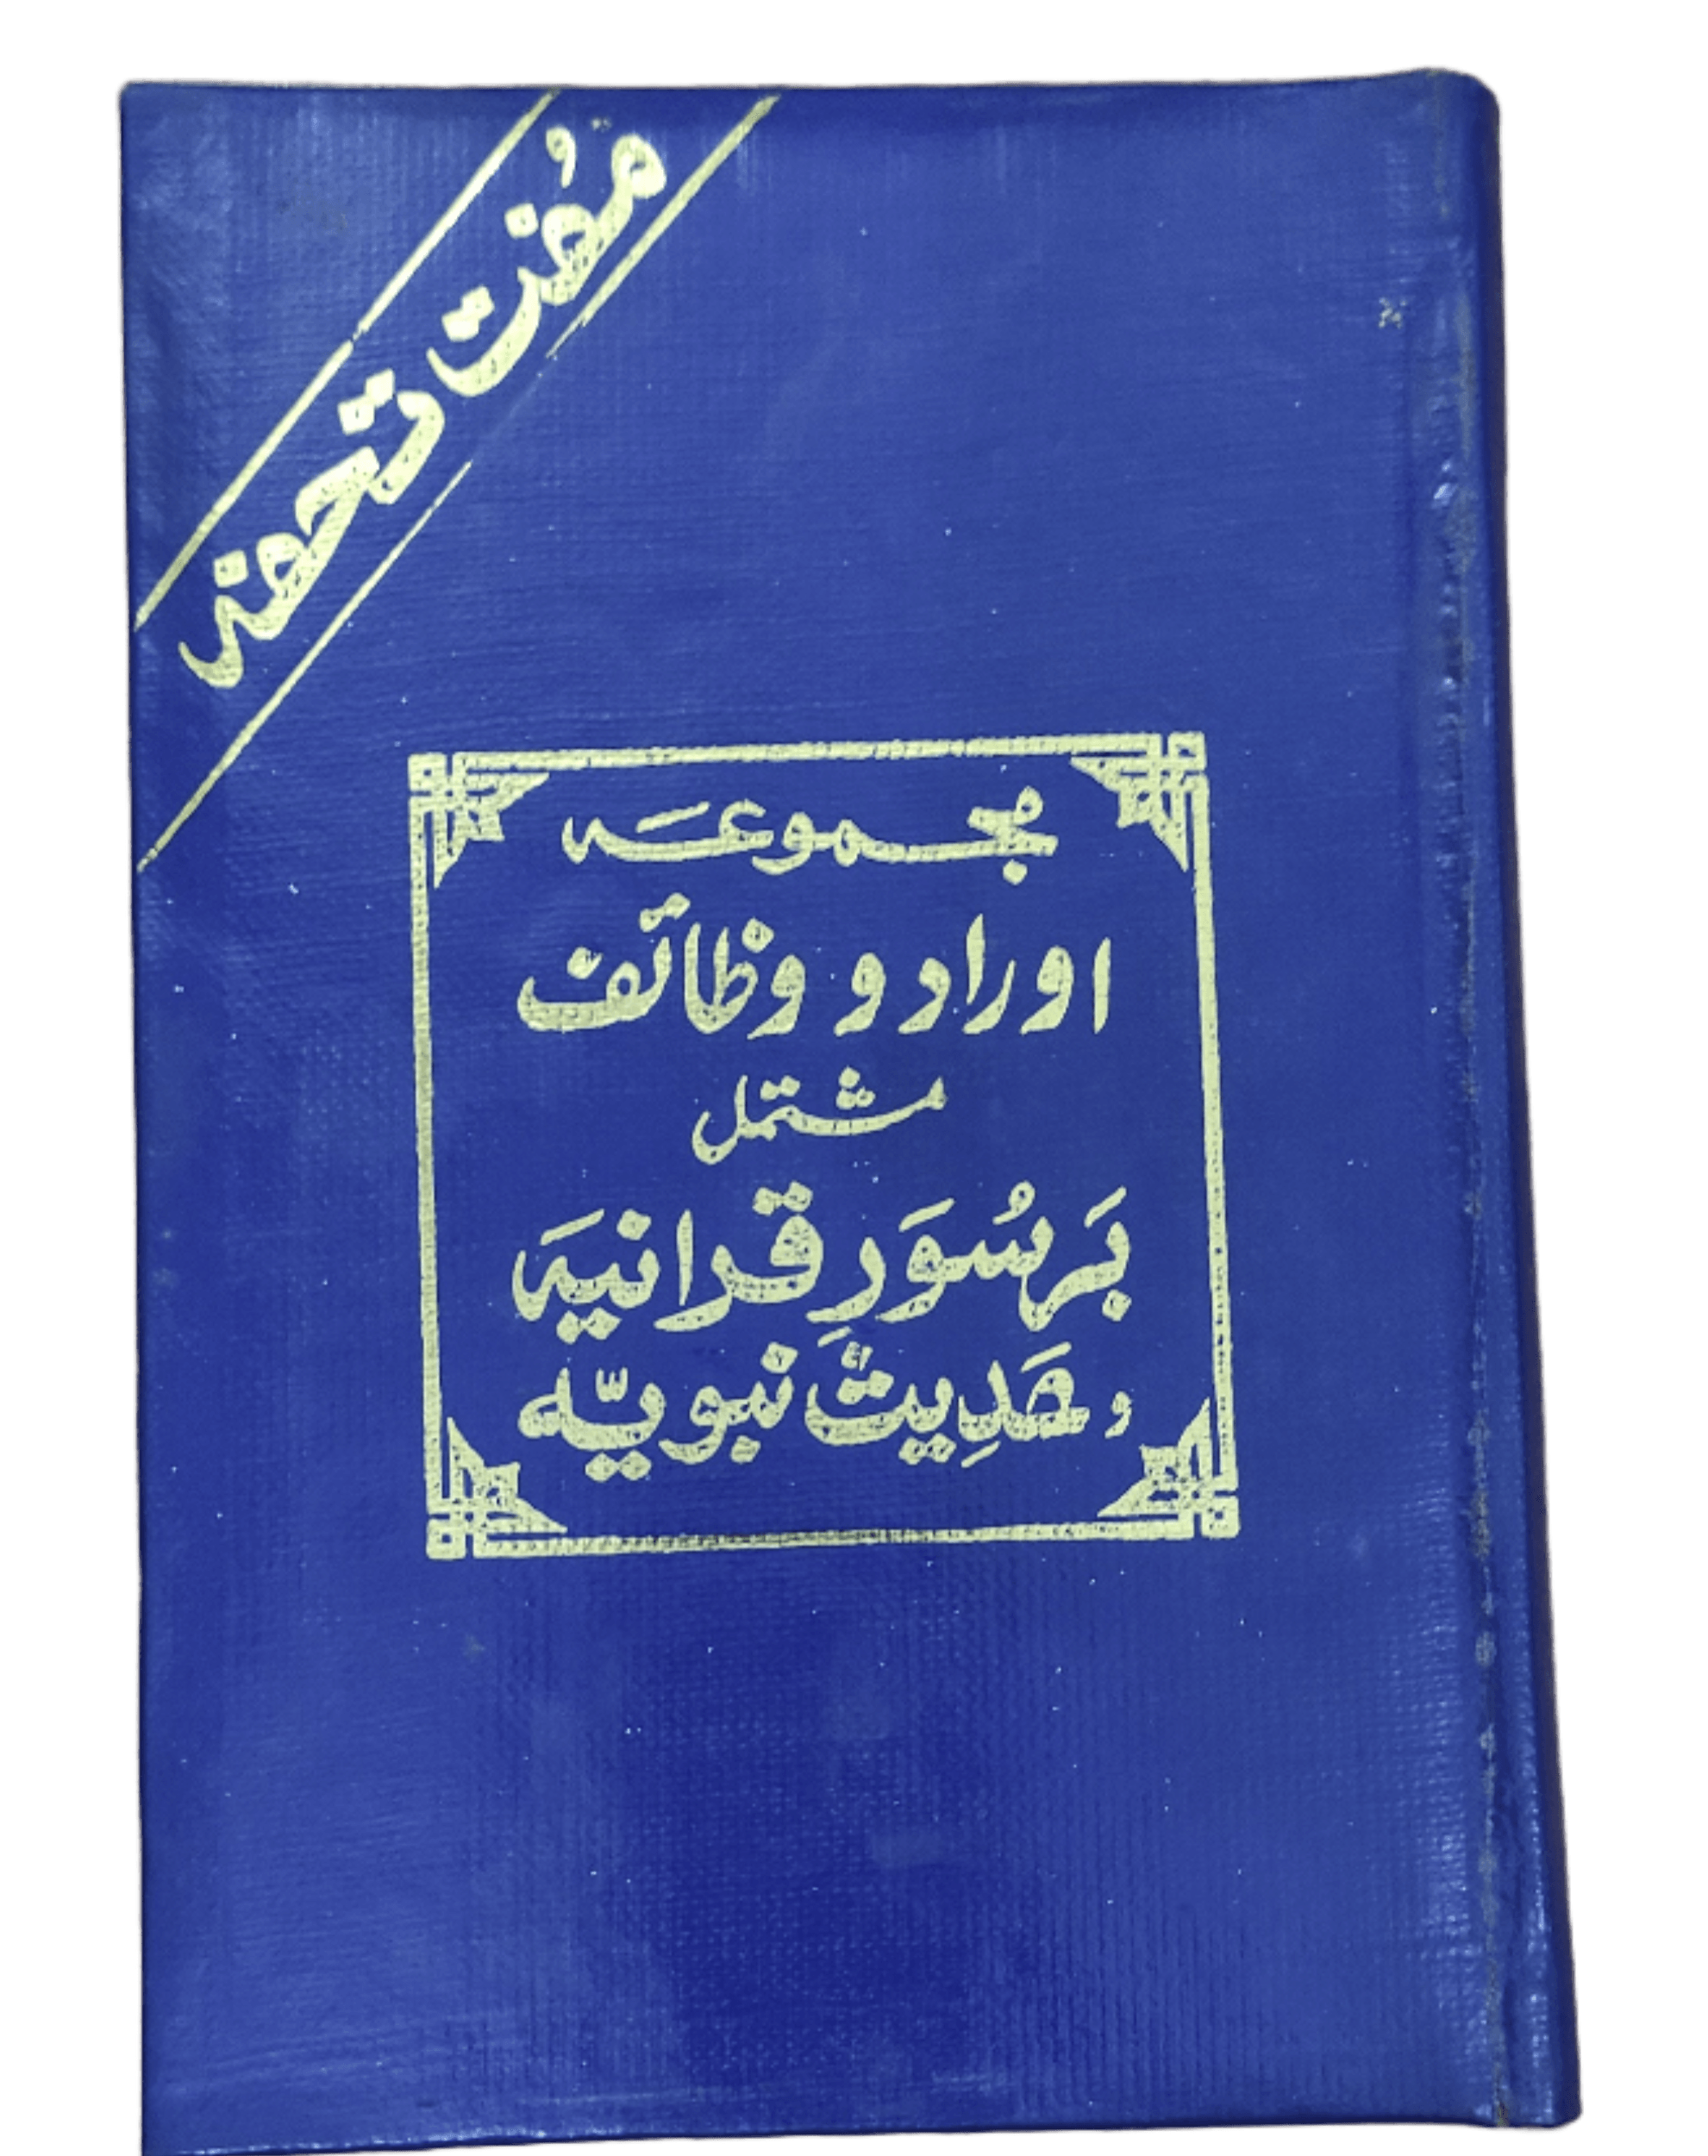 Majmua Aurad Aur Wazaif Mushtamil Barsuwar E Qurania Hadees Nabwia (Compilation of Supplications and Practices Encompassing Quranic Verses and Prophetic Traditions) - KHAJISTAN™